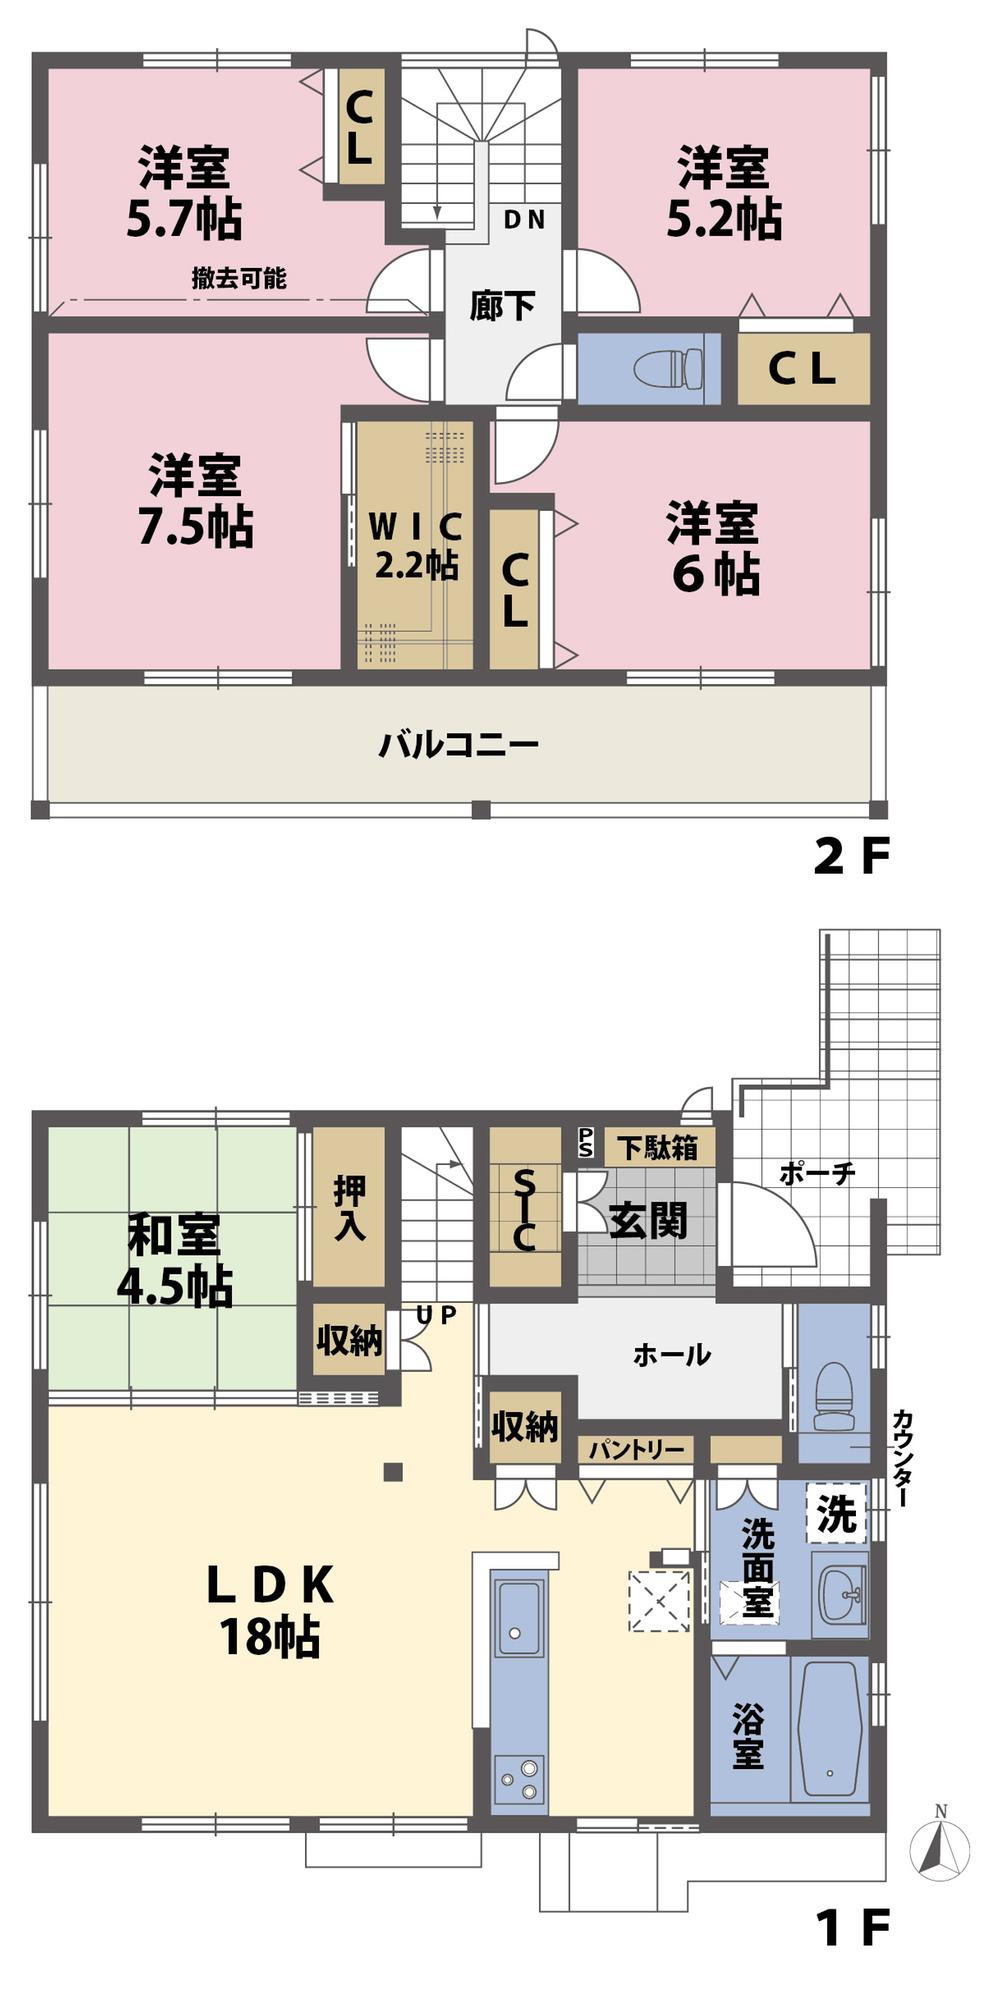 Floor plan. (No.1), Price TBD , 5LDK, Land area 140.98 sq m , Building area 112.58 sq m